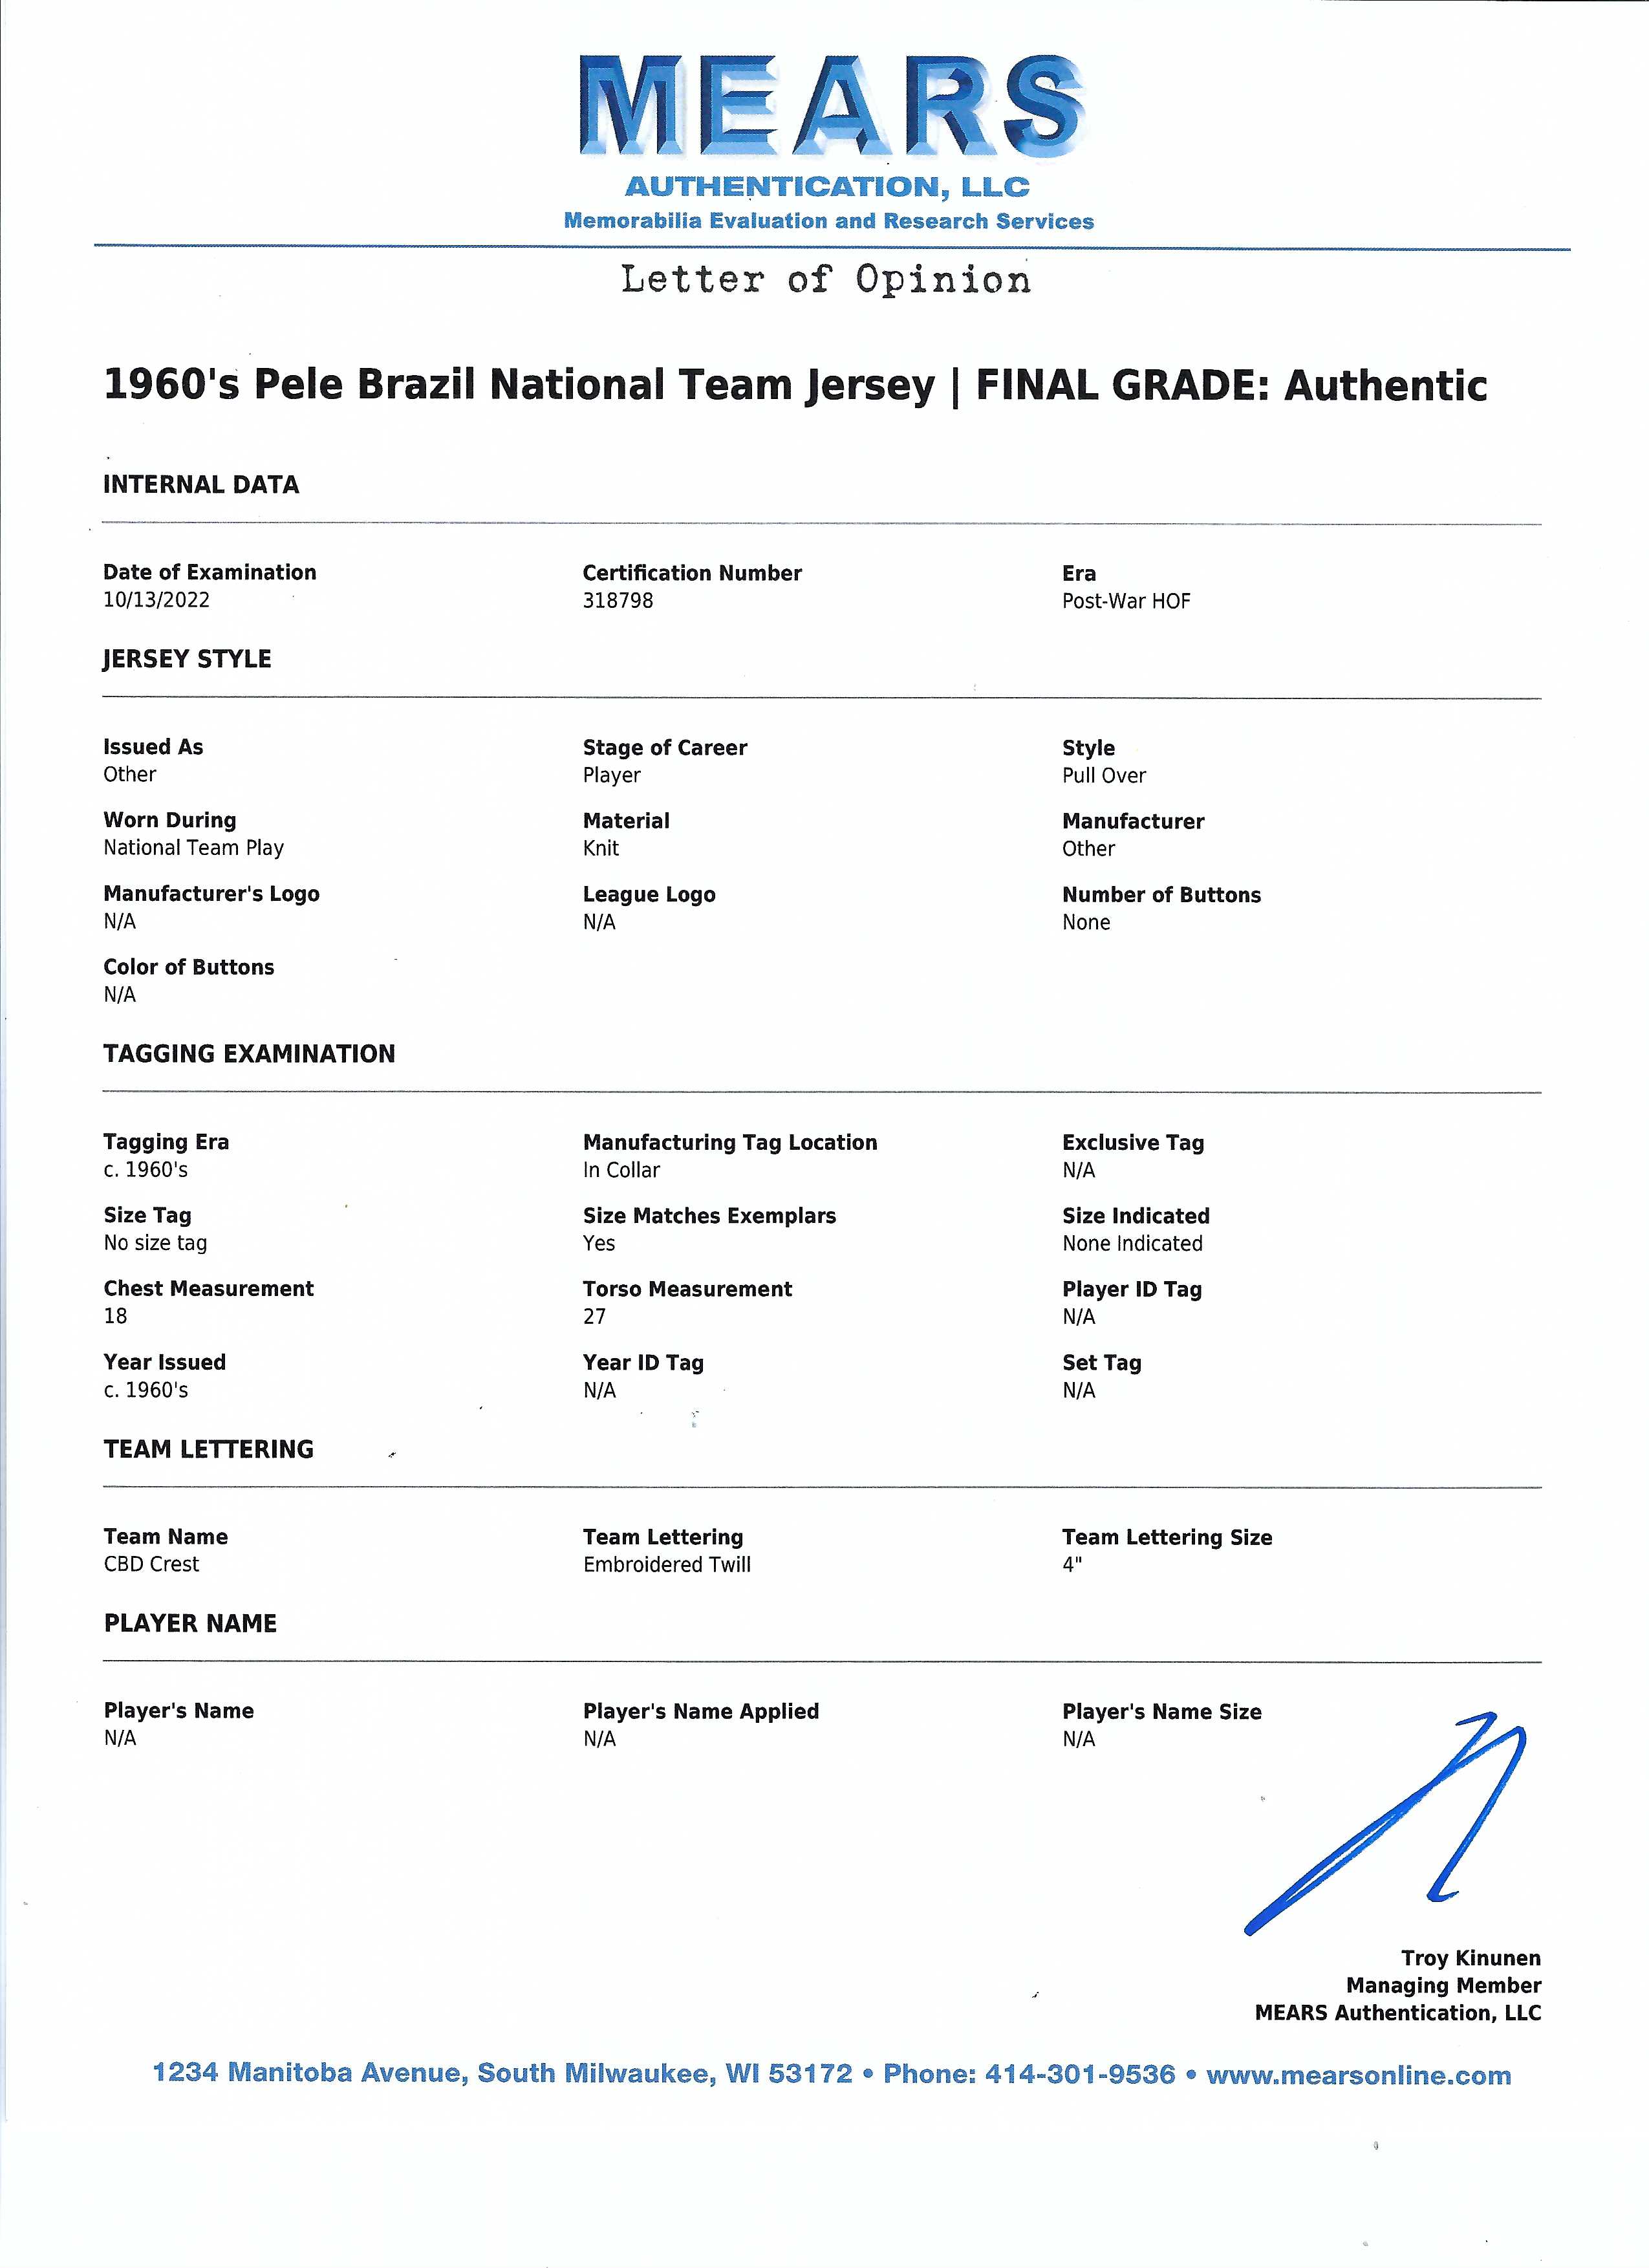 Lot Detail - 2014 BRAZIL NATIONAL TEAM SIGNED OSCAR FIFA WORLD CUP MATCH  WORN #11 JERSEY (LOA FROM BRAZIL KITMAN'S SON)